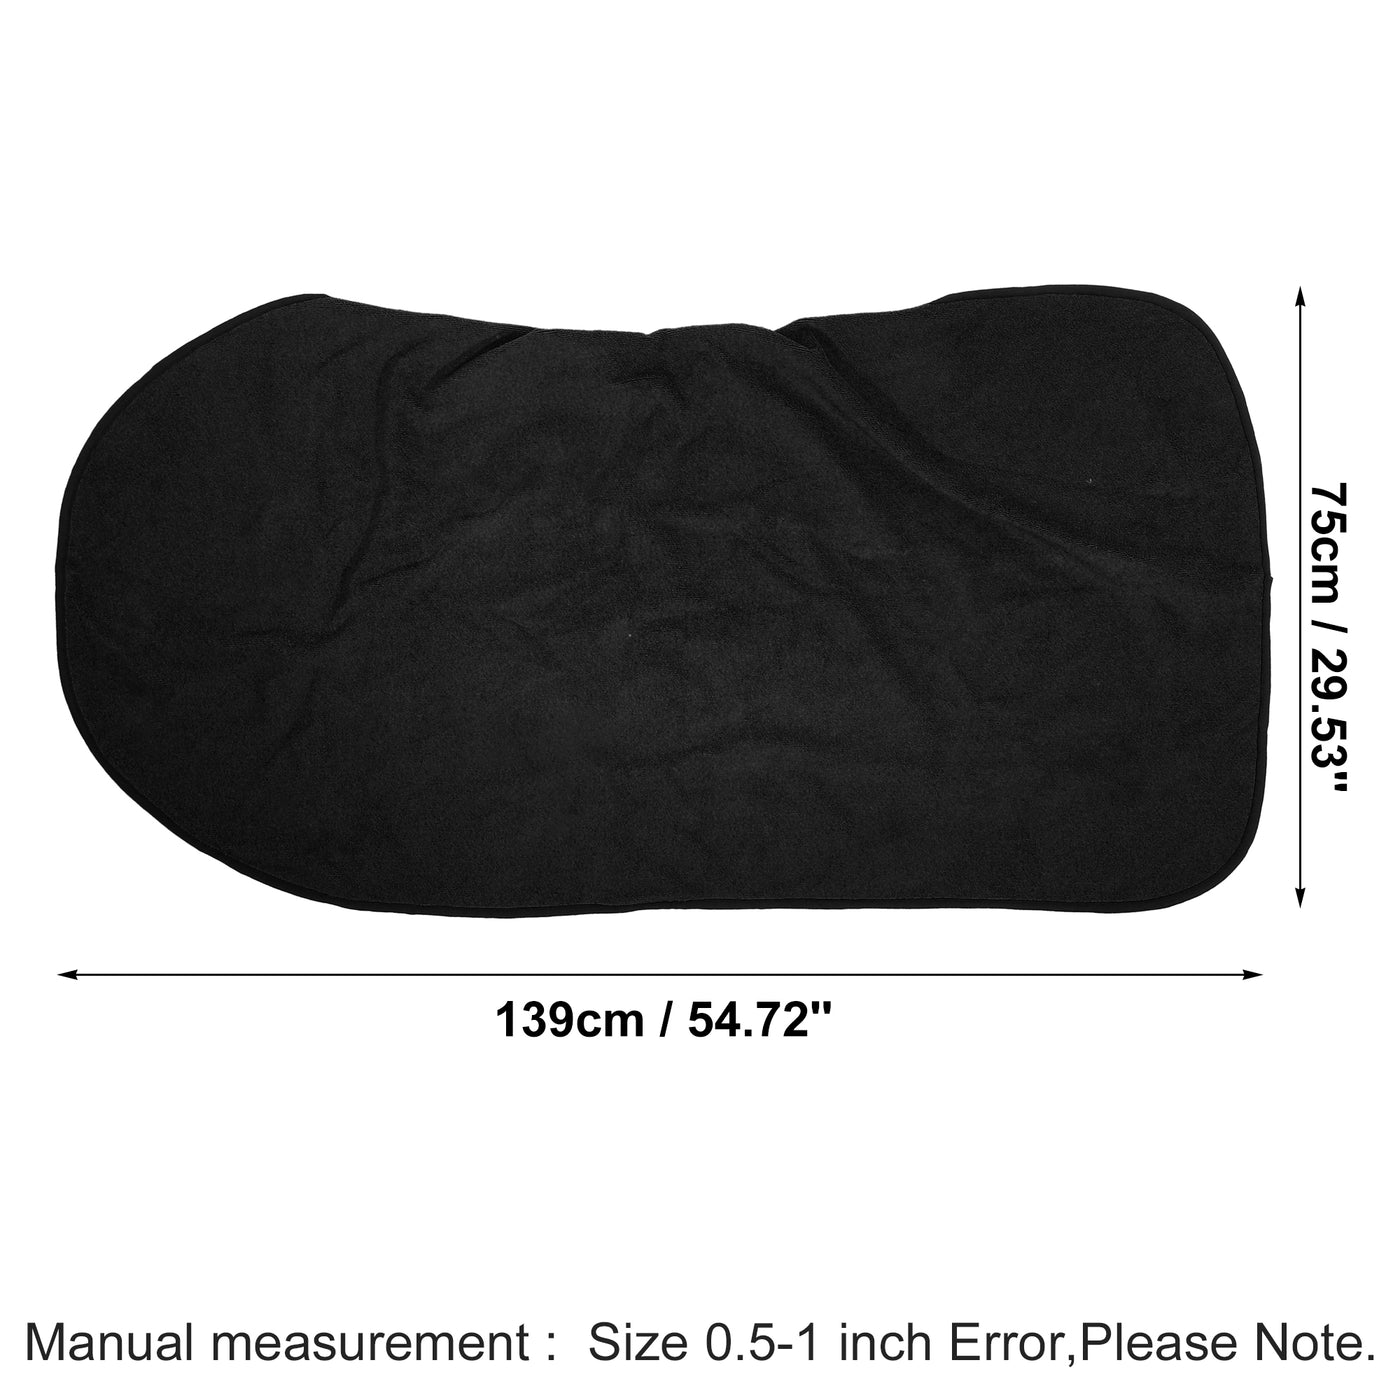 X AUTOHAUX Black Universal Car Seat Cover Anti-Slip Towel Seat Protector Pad for Car Trucks SUV